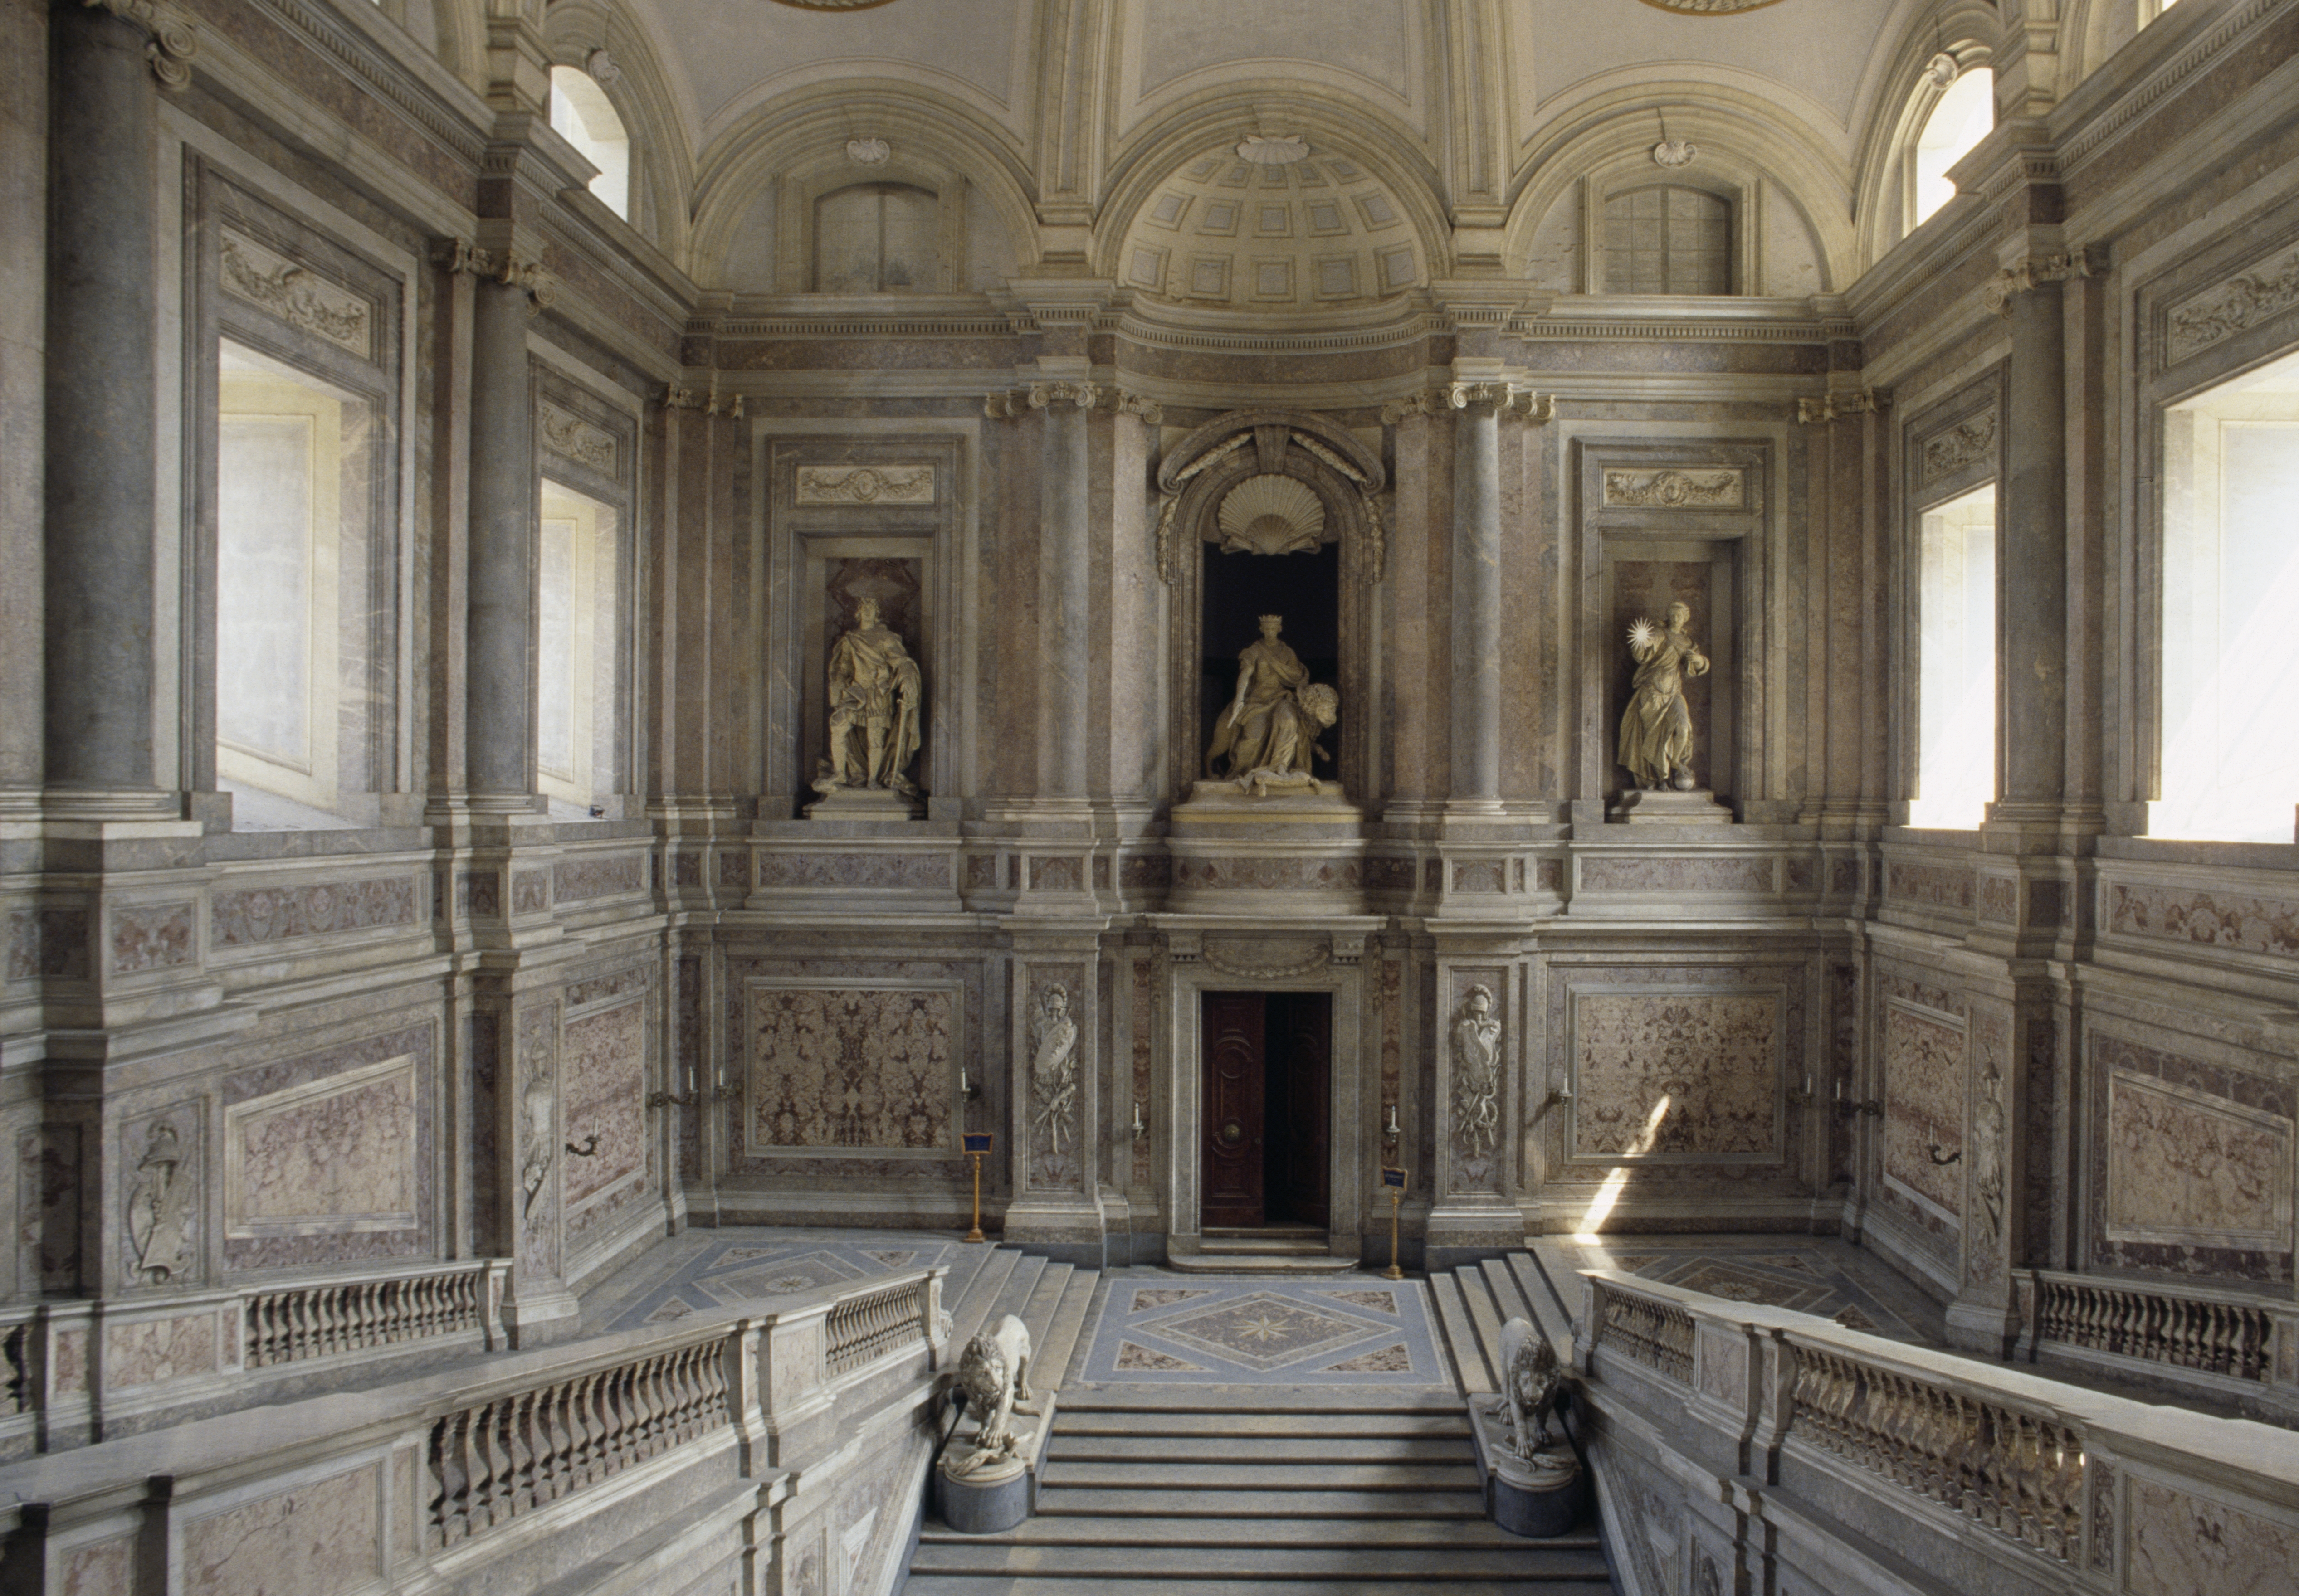 The Grand staircase, architect Luigi Vanvitelli (1700-1773), Royal Palace of Caserta (UNESCO World Heritage List, 1997), Campania. Italy, 18th century.